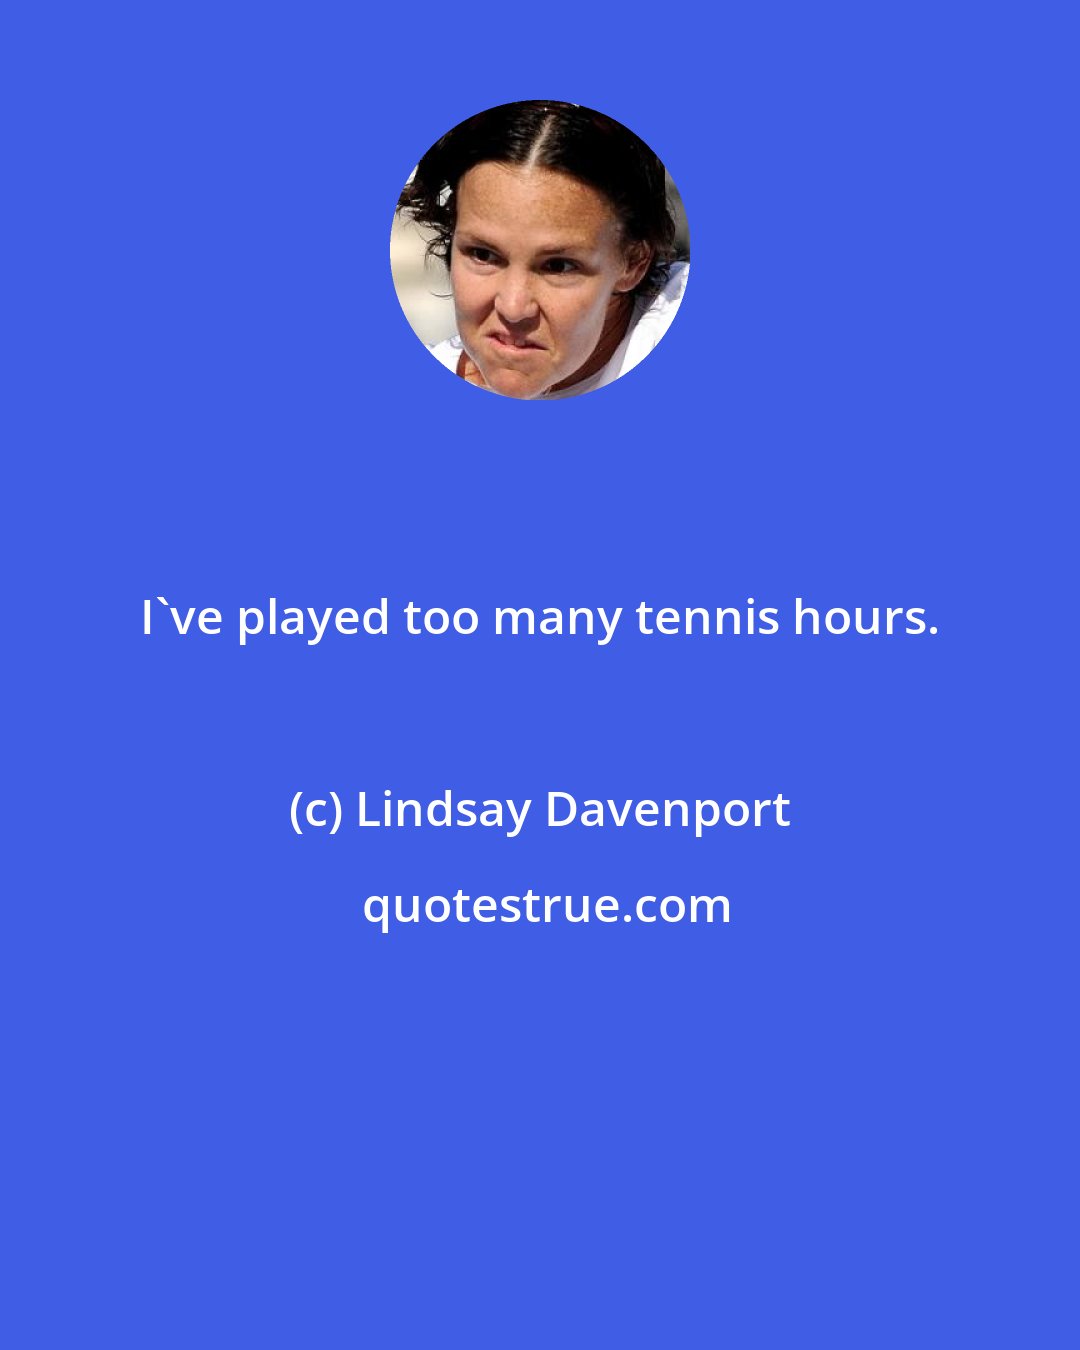 Lindsay Davenport: I've played too many tennis hours.